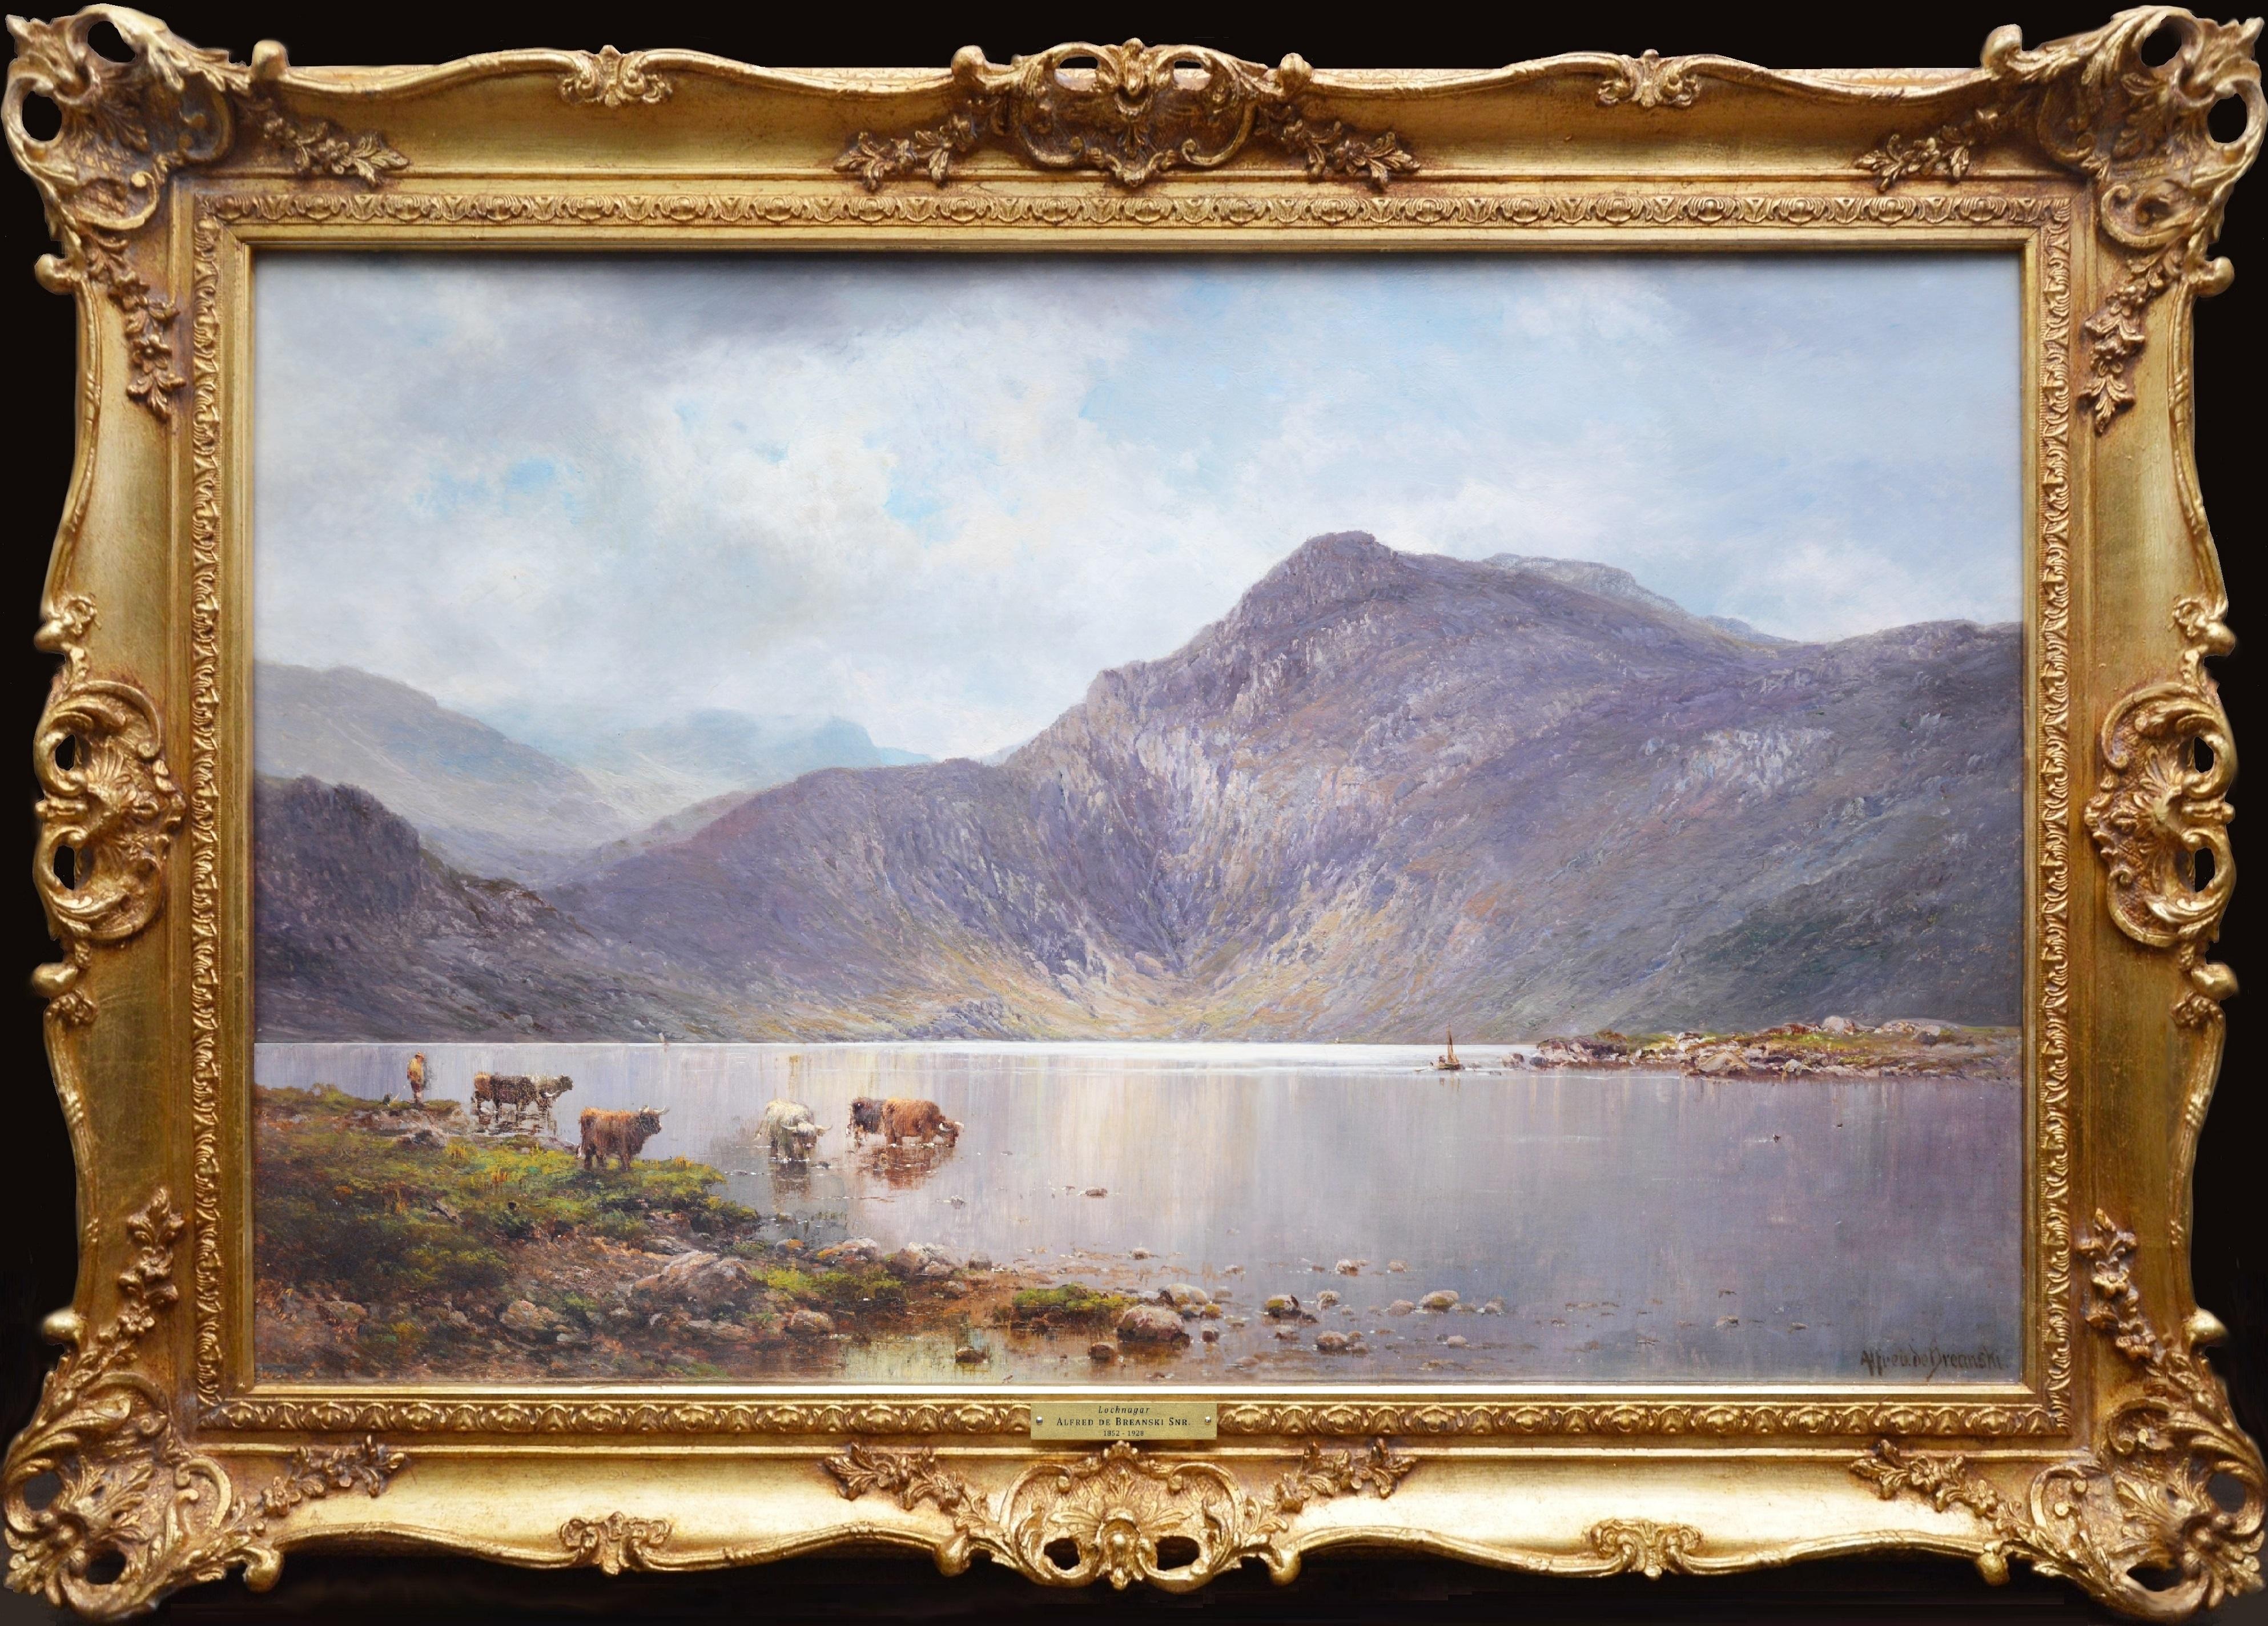 Alfred de Breanski Sr. Animal Painting - Lochnagar - 19th Century Landscape Oil Painting of the Scottish Highlands 